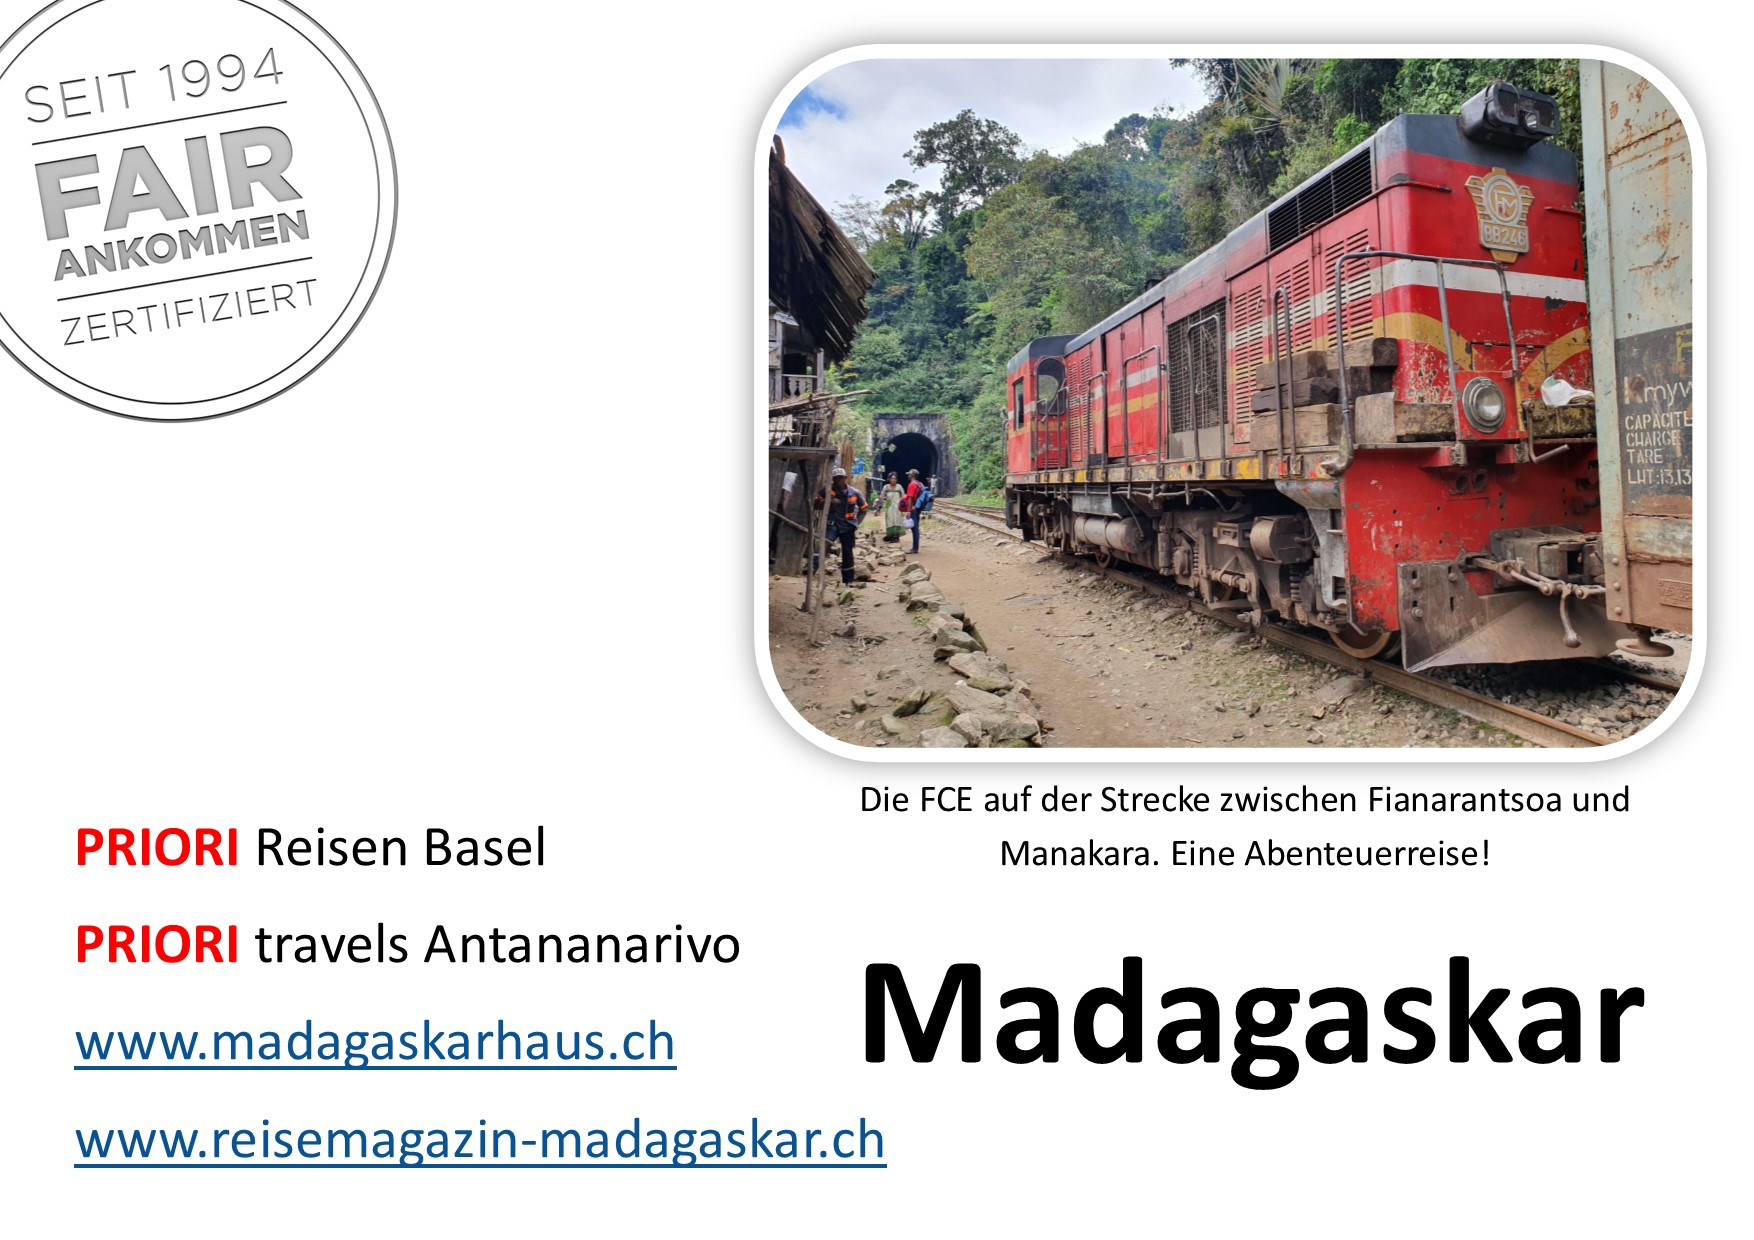 FCE Fianarantsoa-Manakara Madagaskar. Die Erlebniseisenbahn auf der Tropeninsel Madagaskar